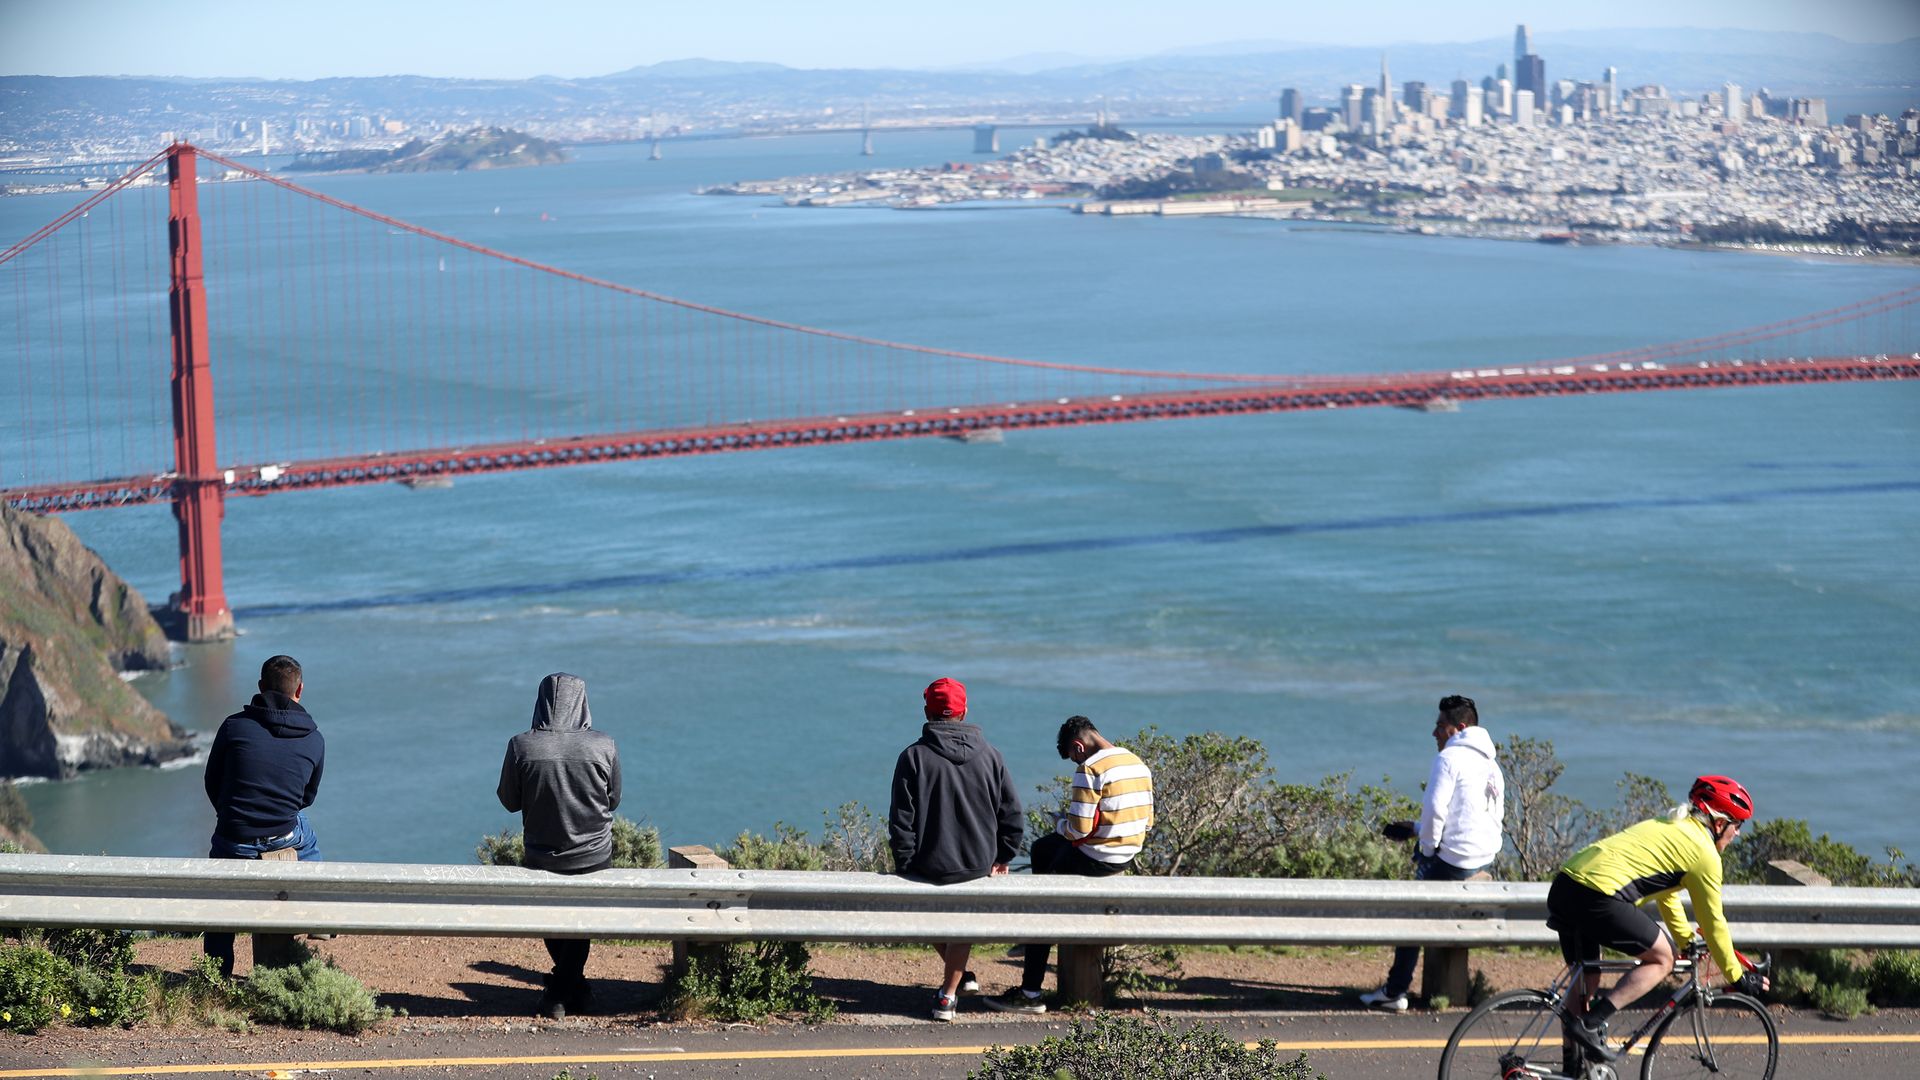 The San Francisco peninsula as seen from Sausalito.